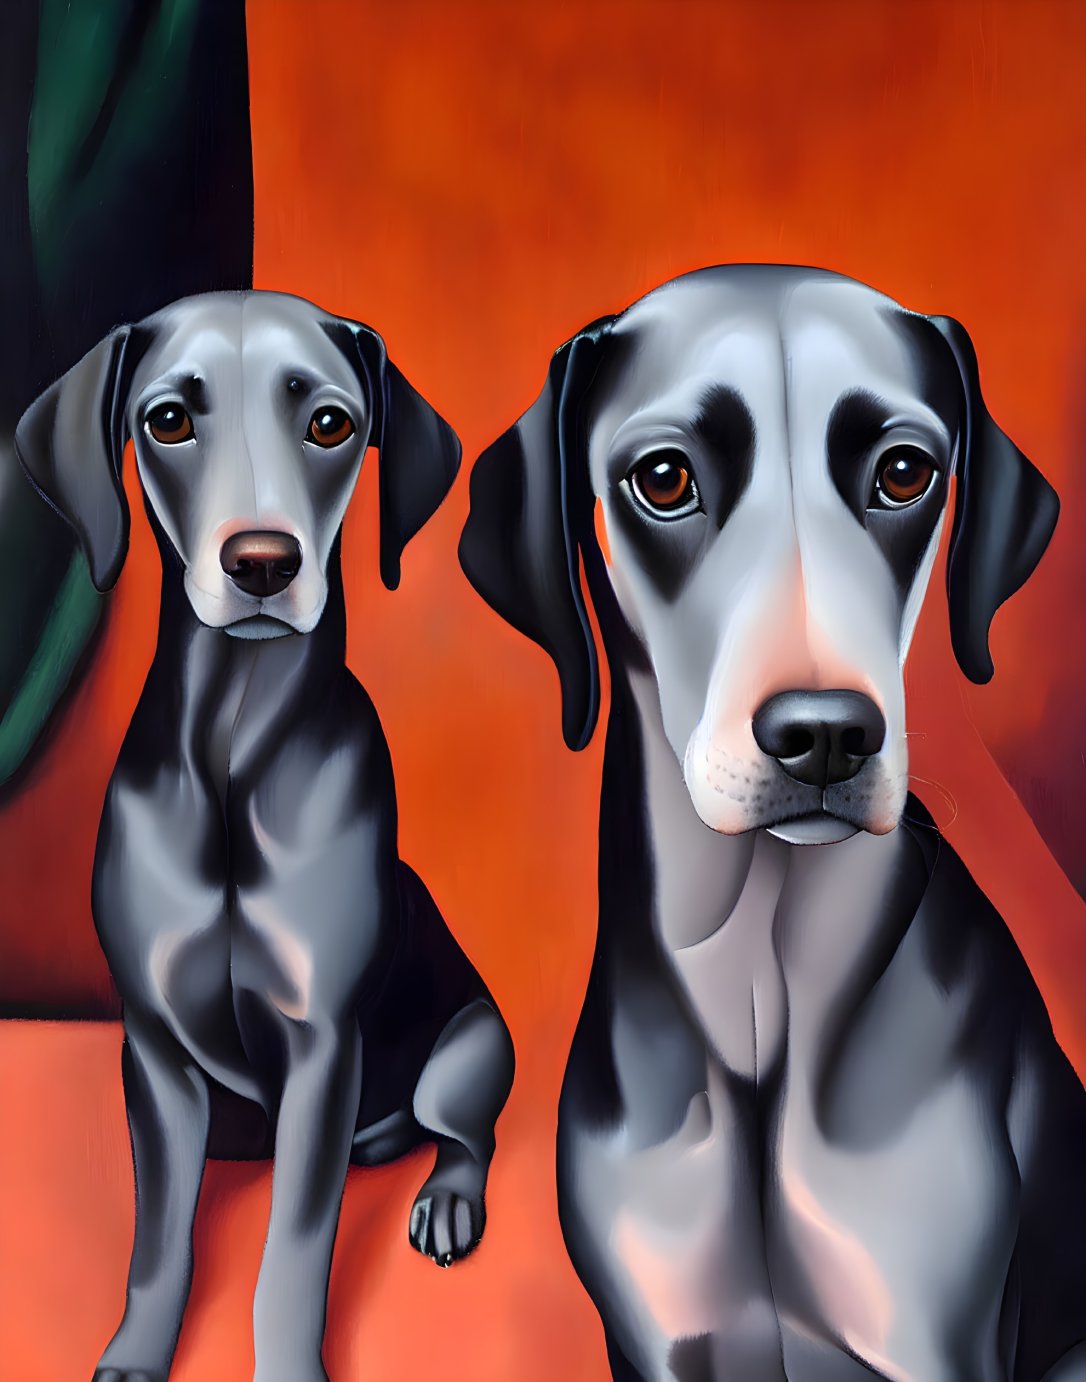 Stylized black dog paintings with expressive eyes on orange and red backdrop